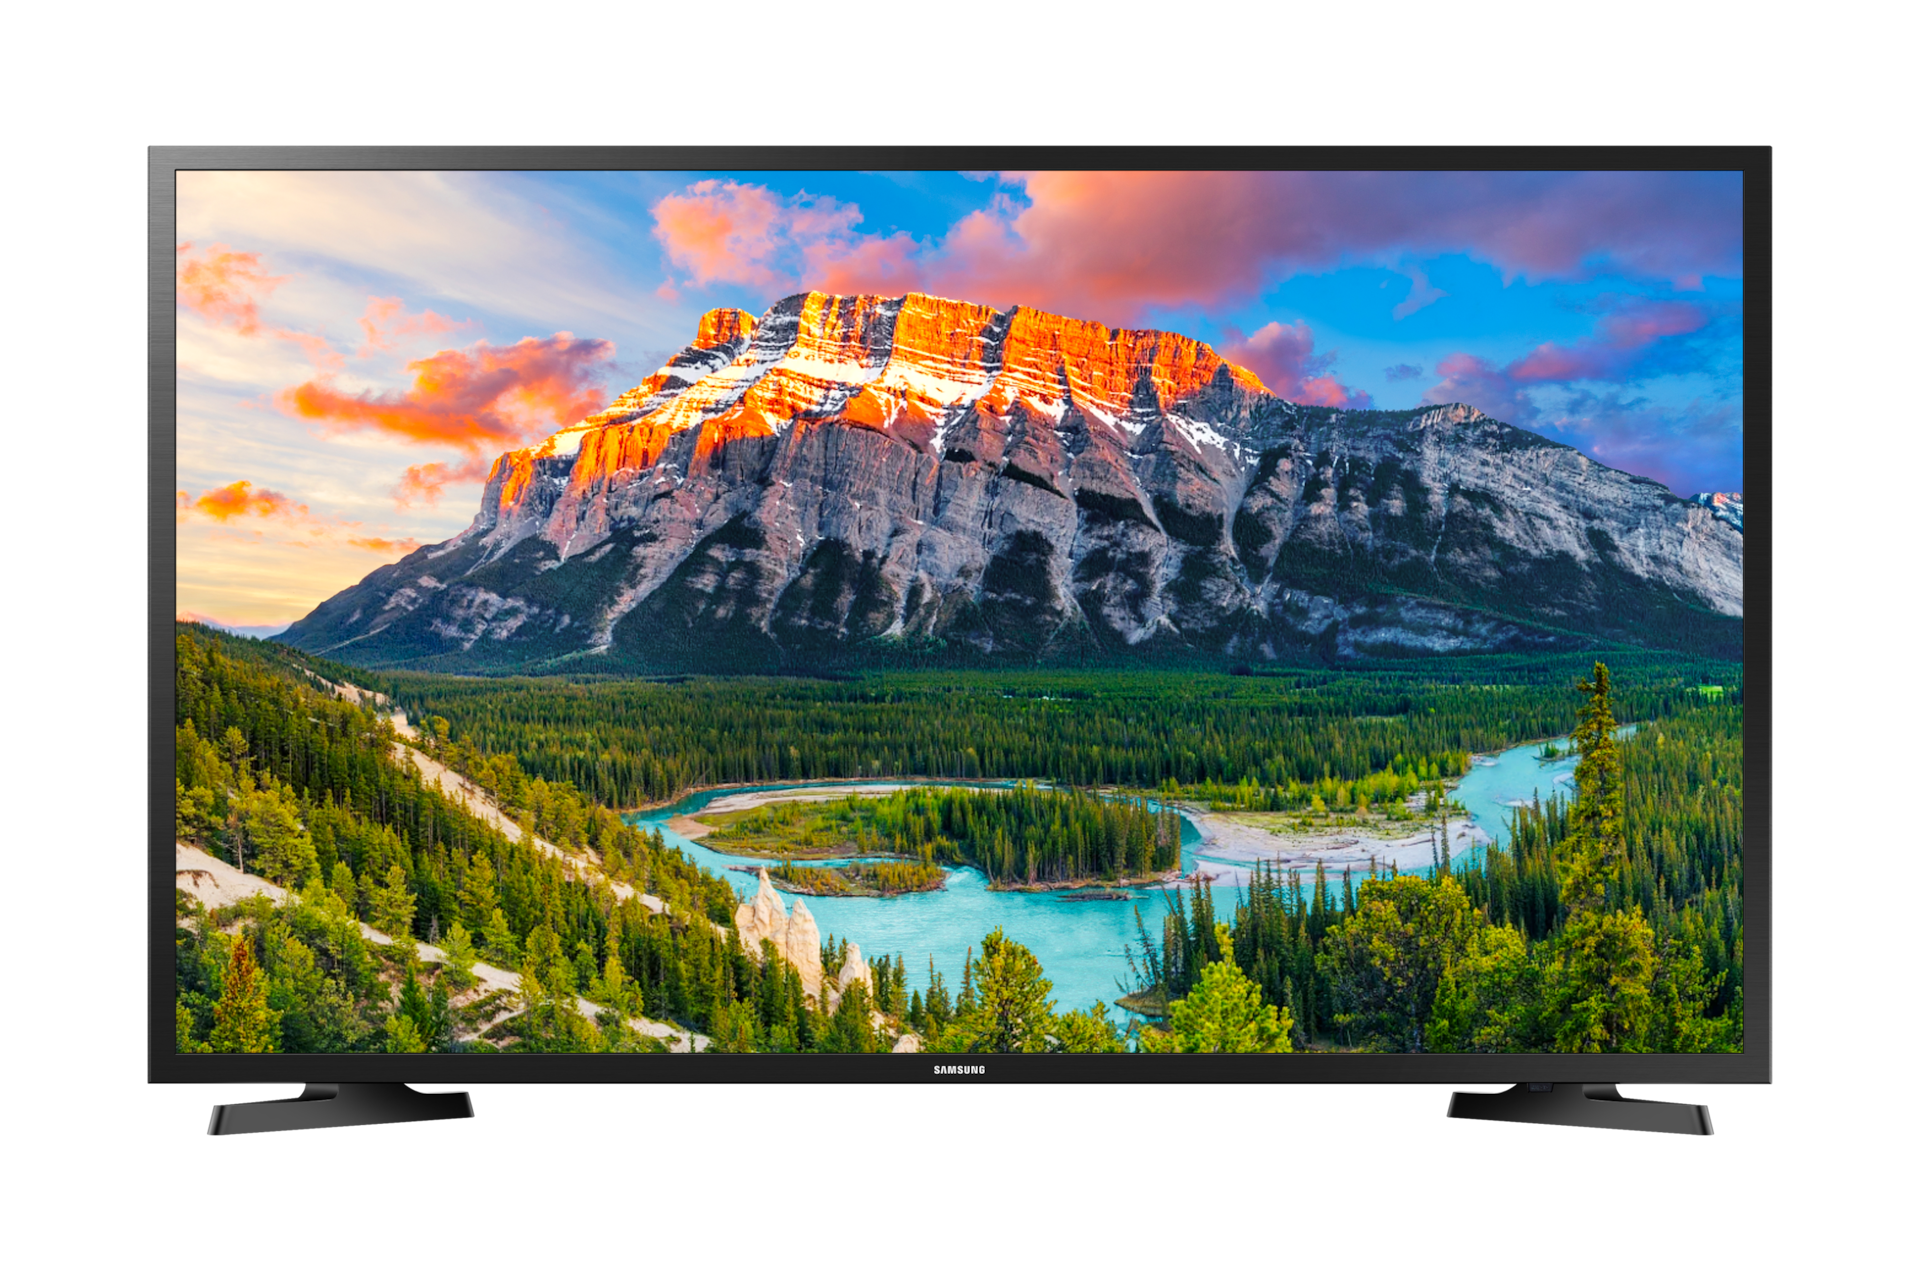 Patch seks klap 40" Flat Full HD TV N5000 Series 5 - Specifications | Samsung Africa